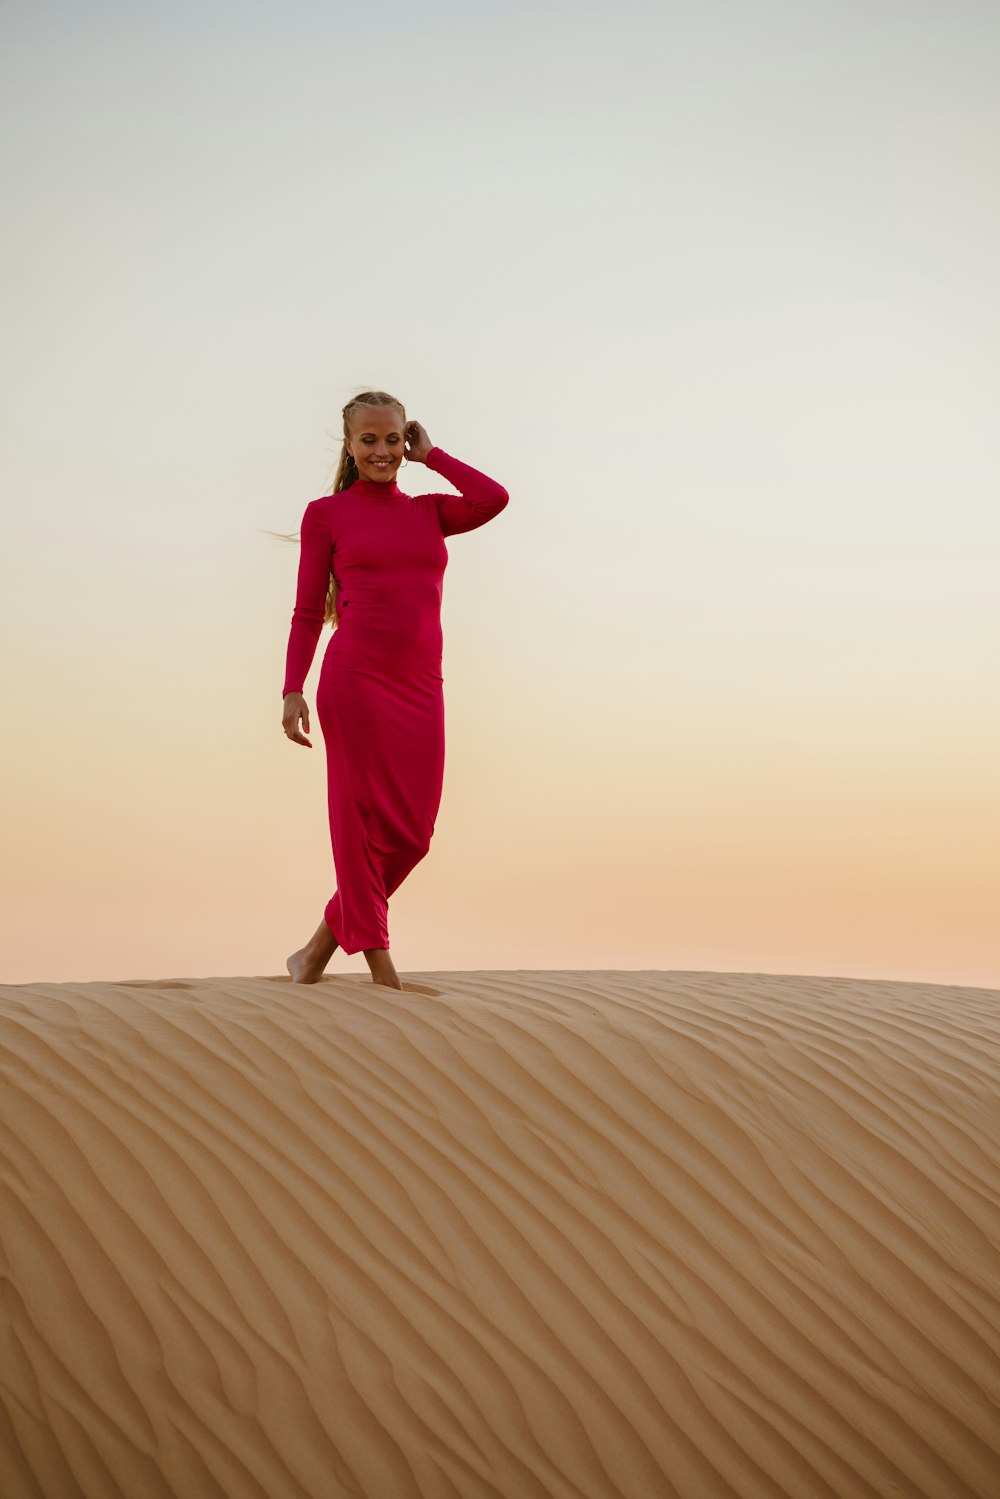 a woman in a red dress walking across a desert